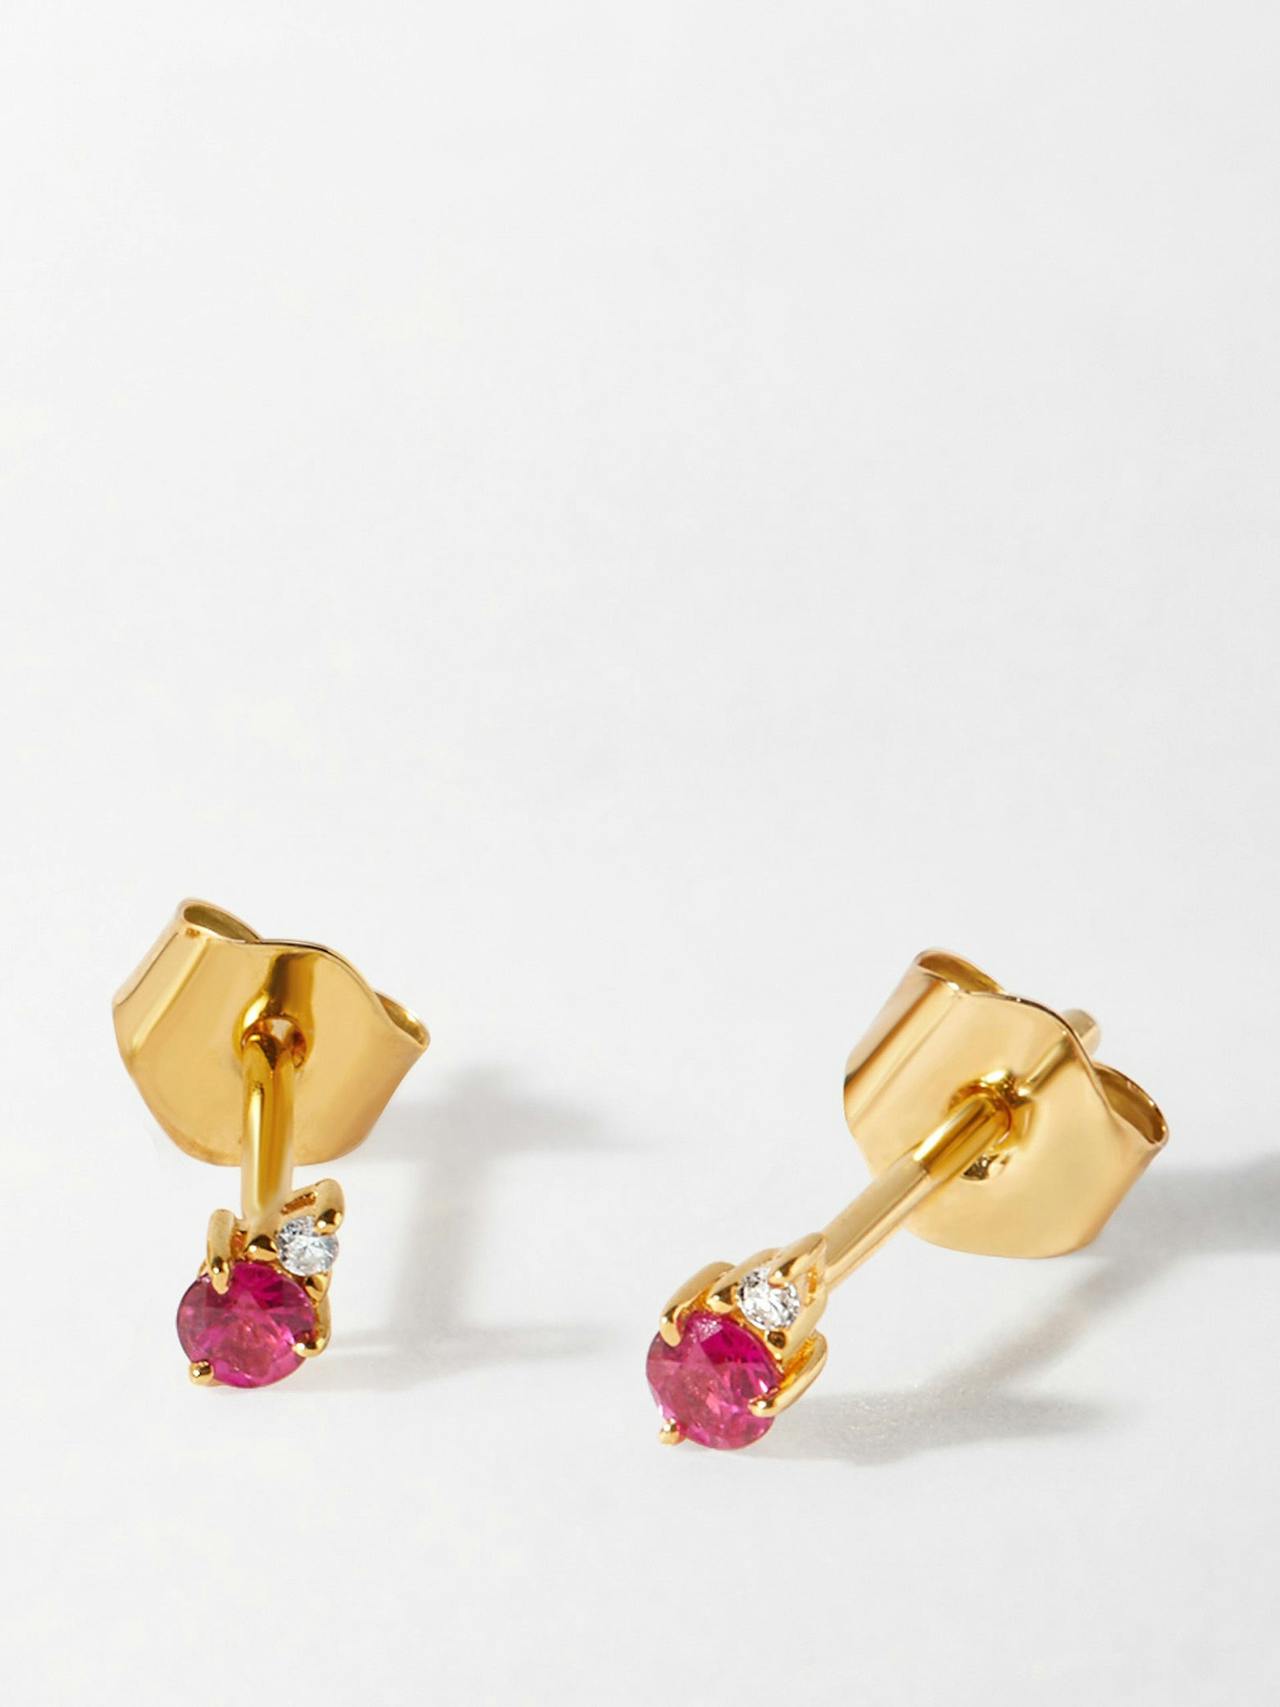 Ruby diamond stud earrings